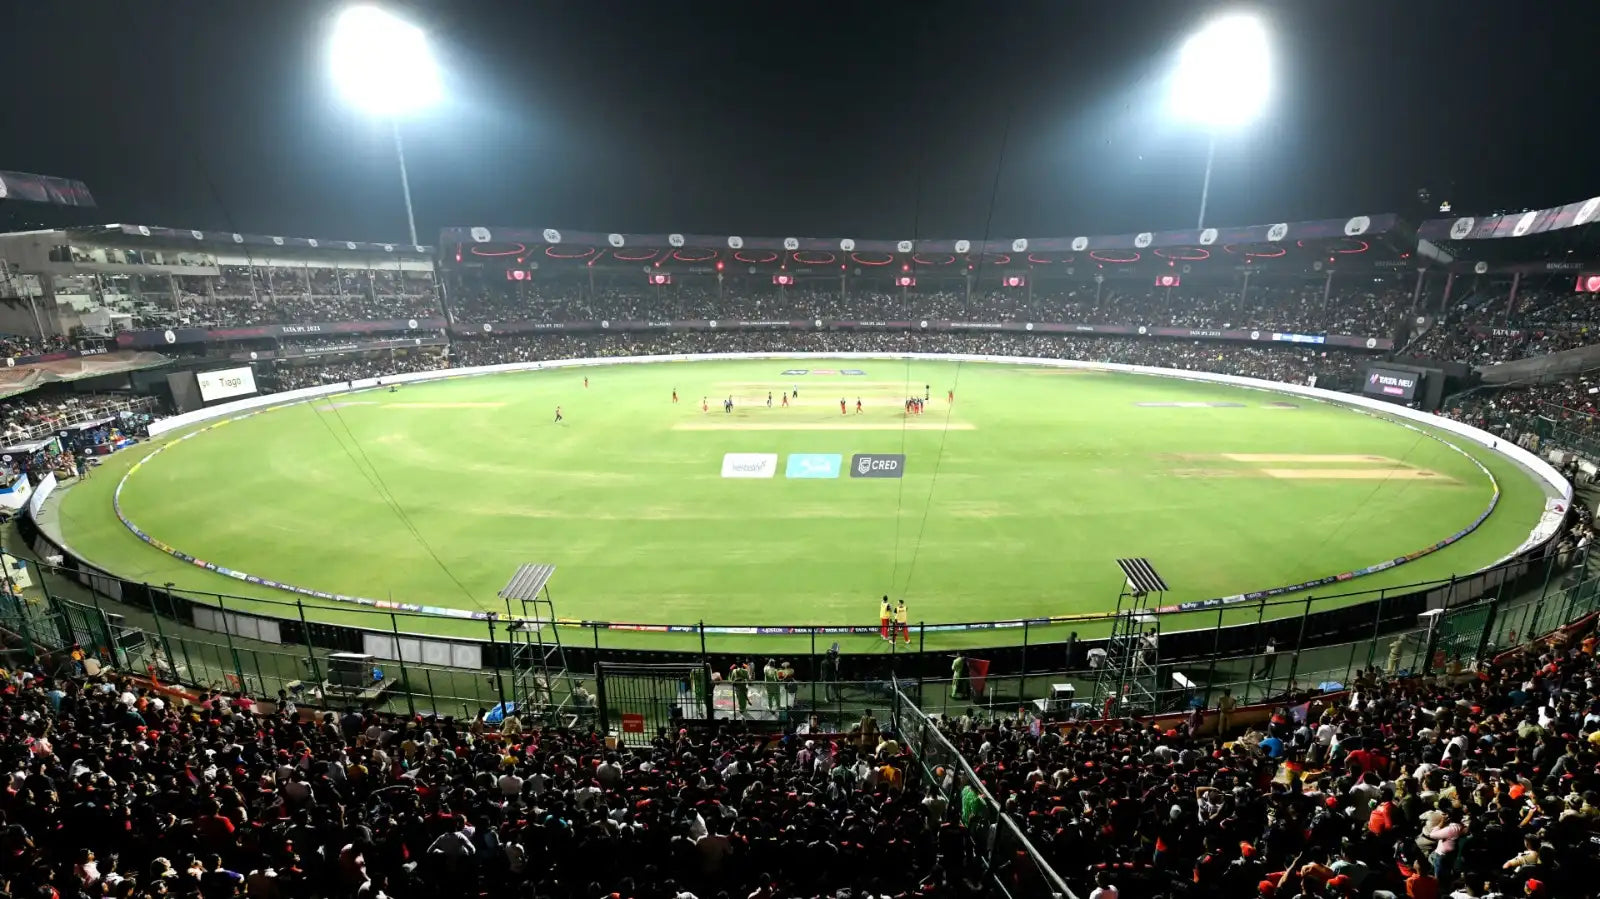 A panoramic view of the Chinnaswamy Cricket Ground